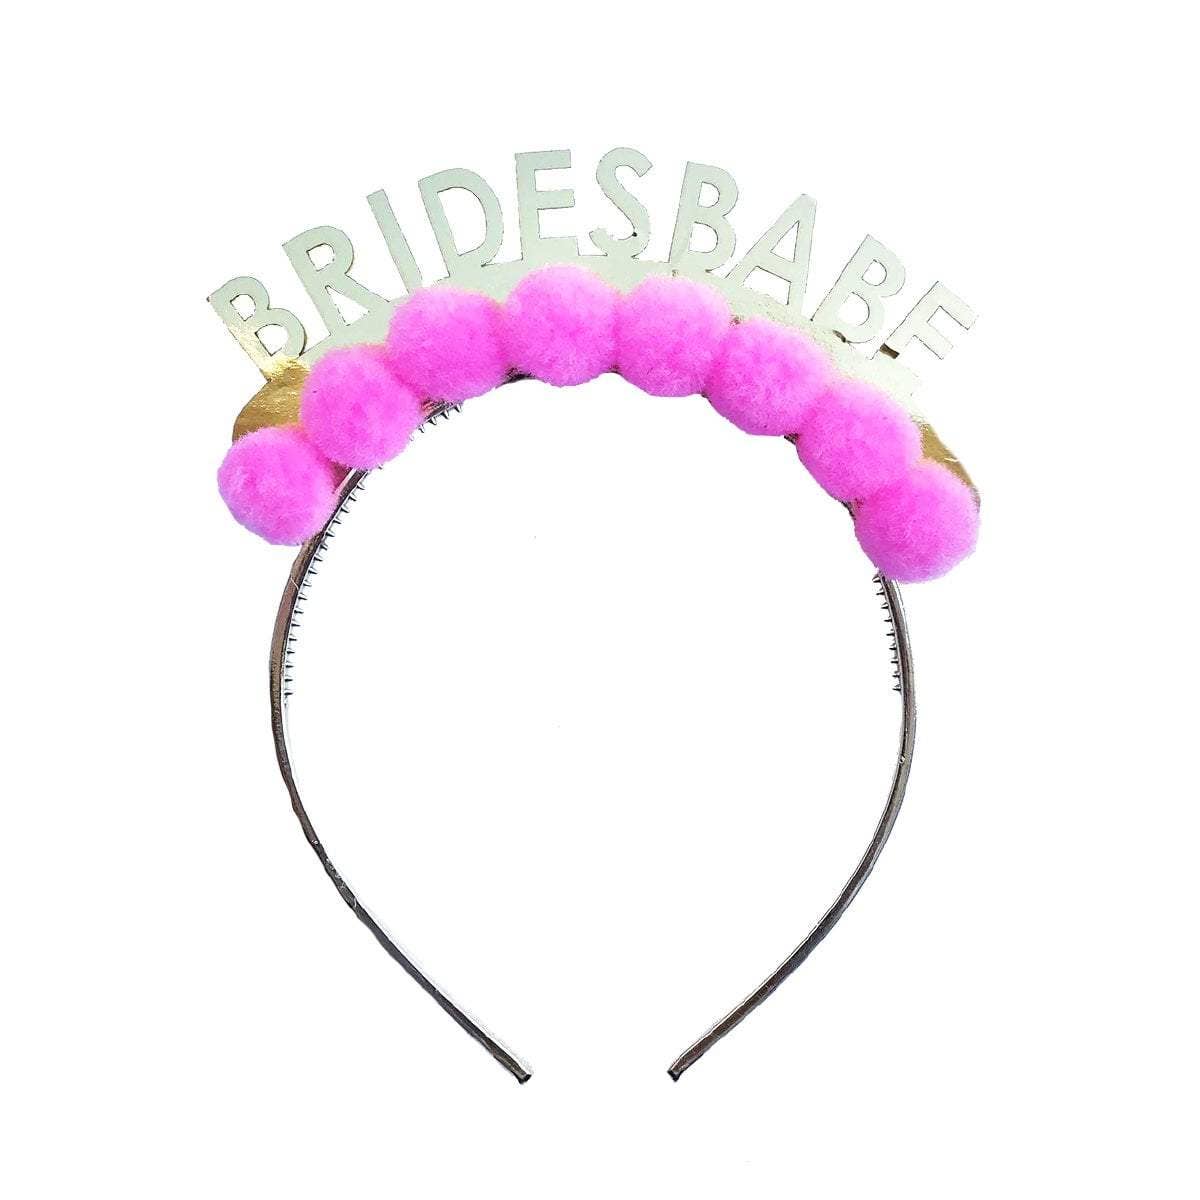 Bridesbabe Headband